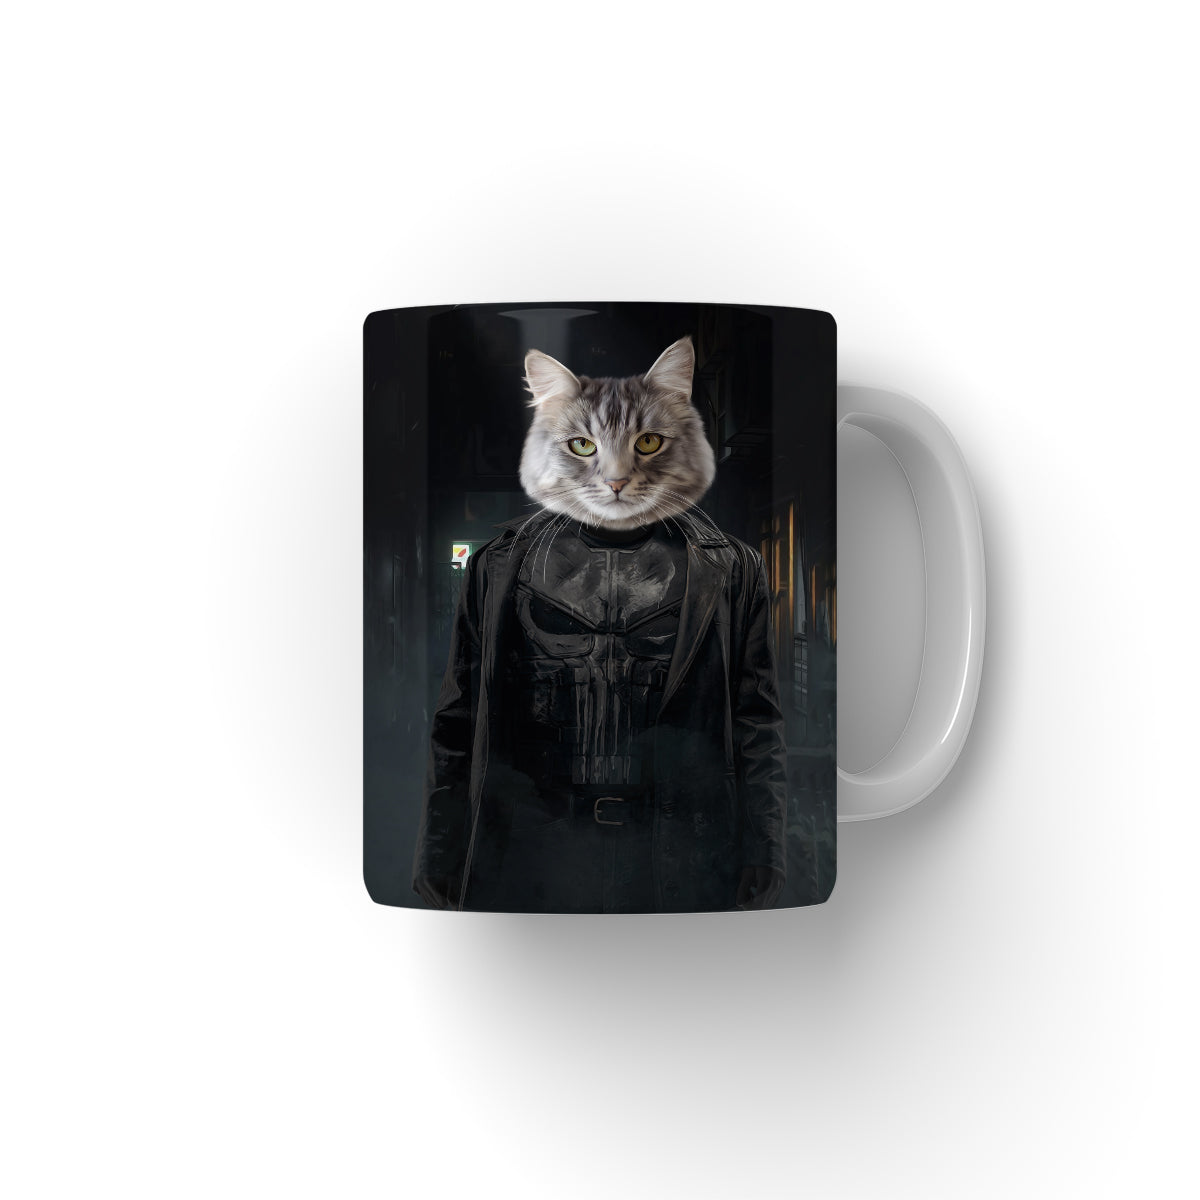 The Punisher: Paw & Glory, pawandglory, custom mug with cats, personalized dog mugs, personalised mugs with dogs, personalized pet mugs, pet art mug, personalized coffee mug with cats, Pet Portrait Mug